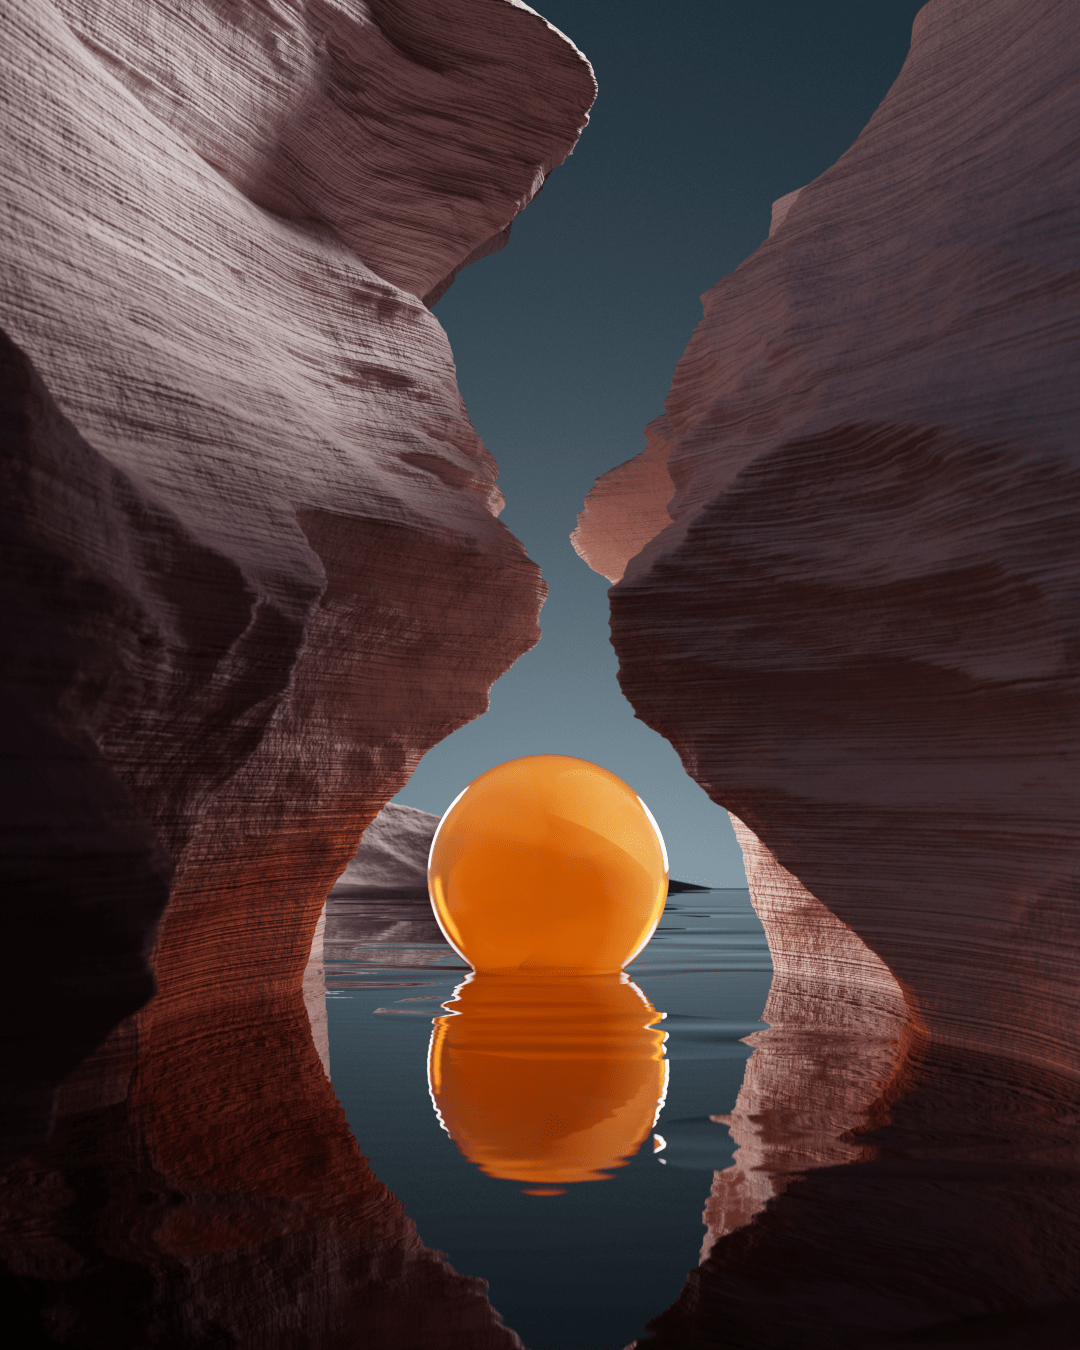 design-motion-3d-photography-octane-redshift-art-visual-animation-render-style-graphic-digital-federicopicci-piccirillo-federico-federicopiccirillo-samsung-wallpaper-phone-screen-screensaver-clim-studio-climstudio-nature-rock-orange-sphere-canyon